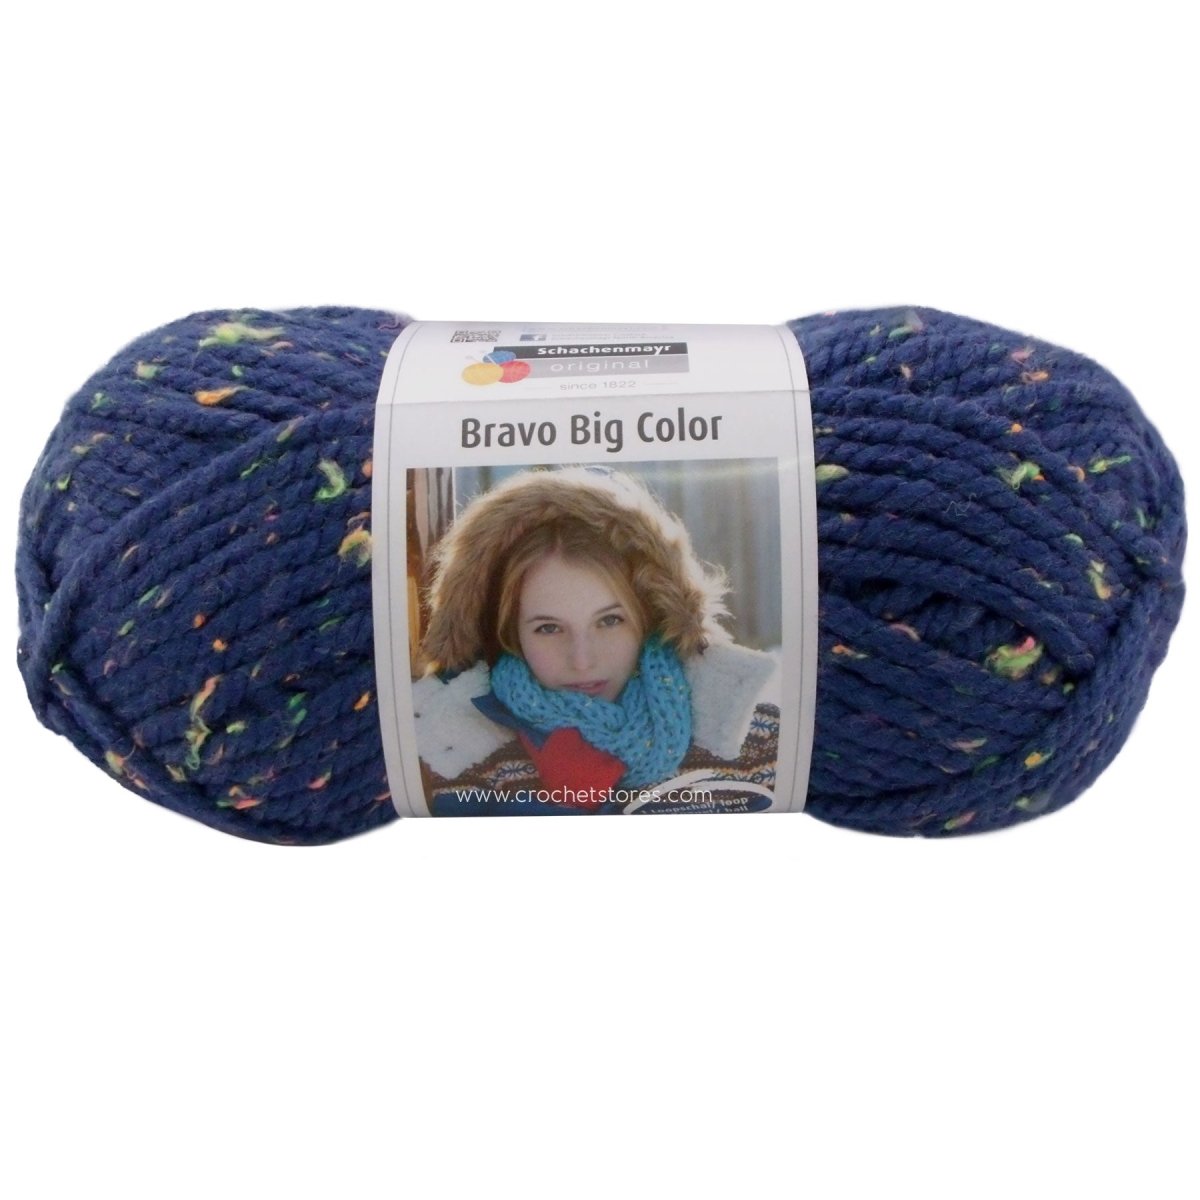 BRAVO BIG COLOR - Crochetstores9807720-3524053859056502